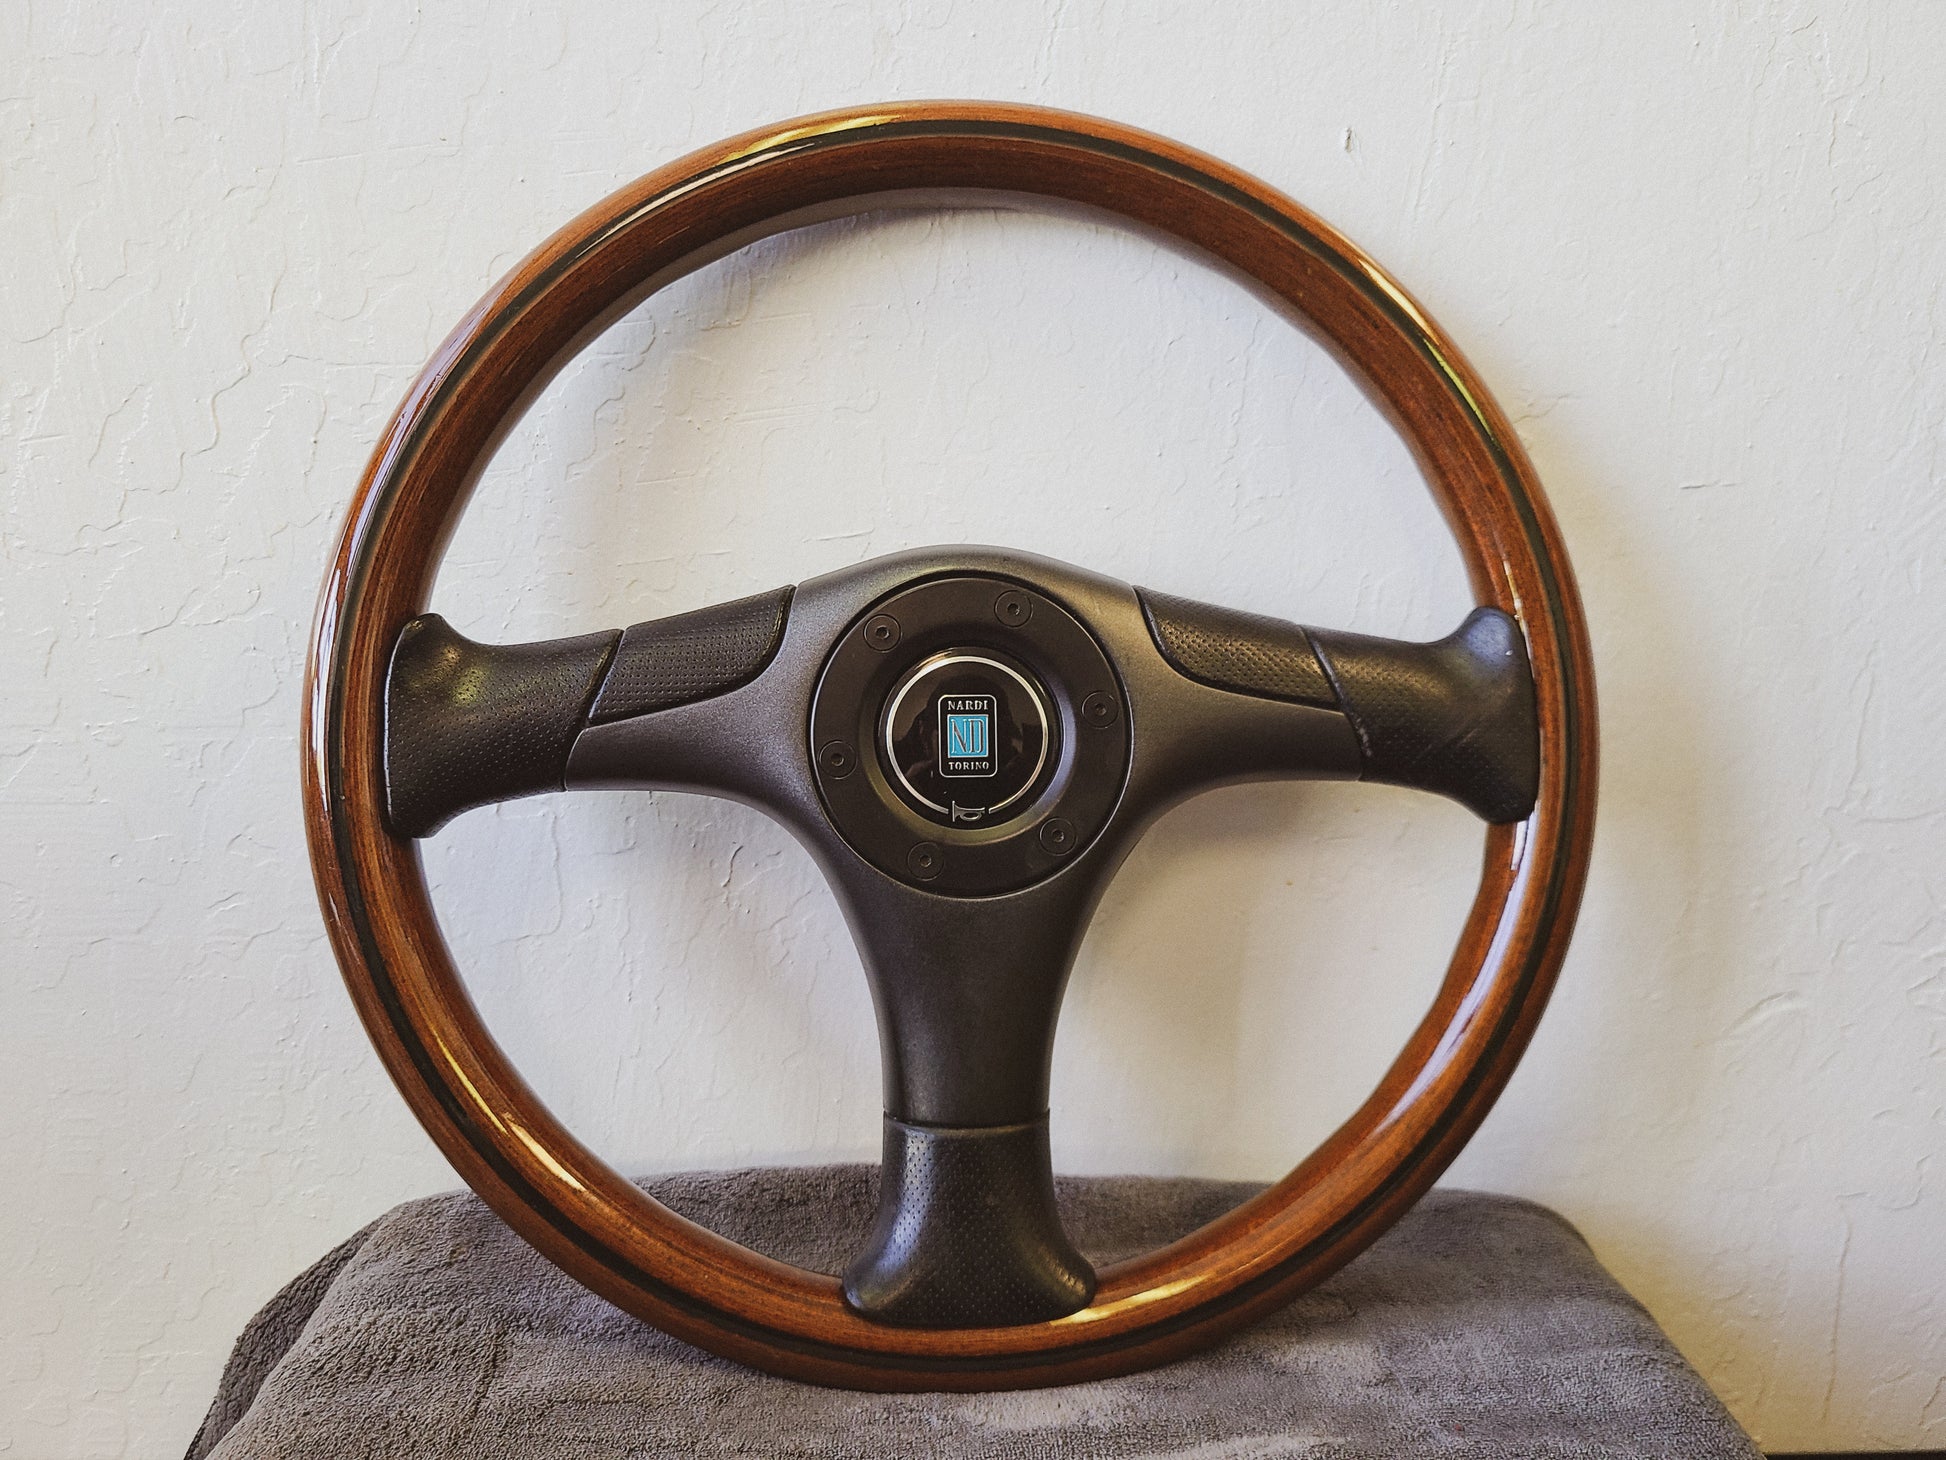 Nardi Torino 3 spoke wood steering wheel – sevenspeedshop